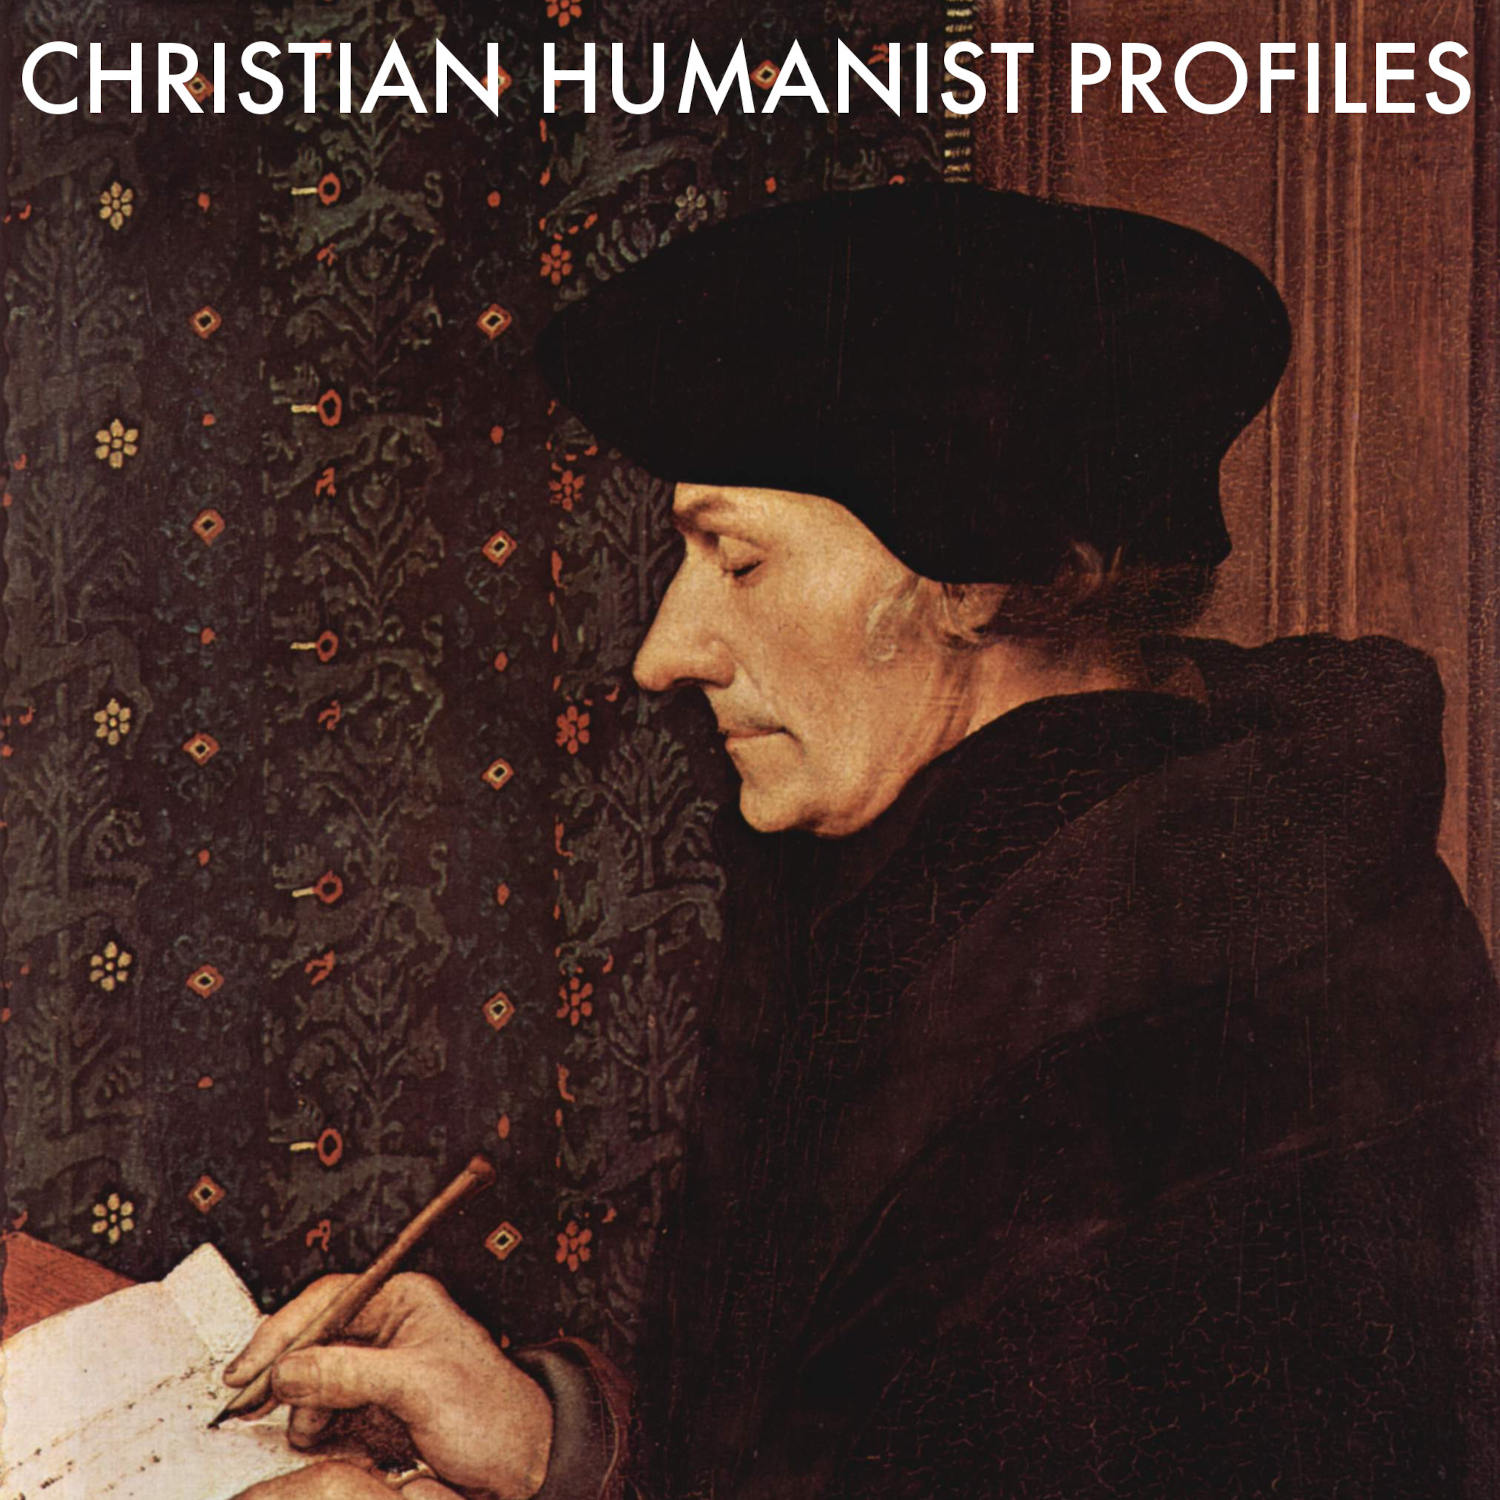 Christian Humanist Profiles 149: Into the Deep